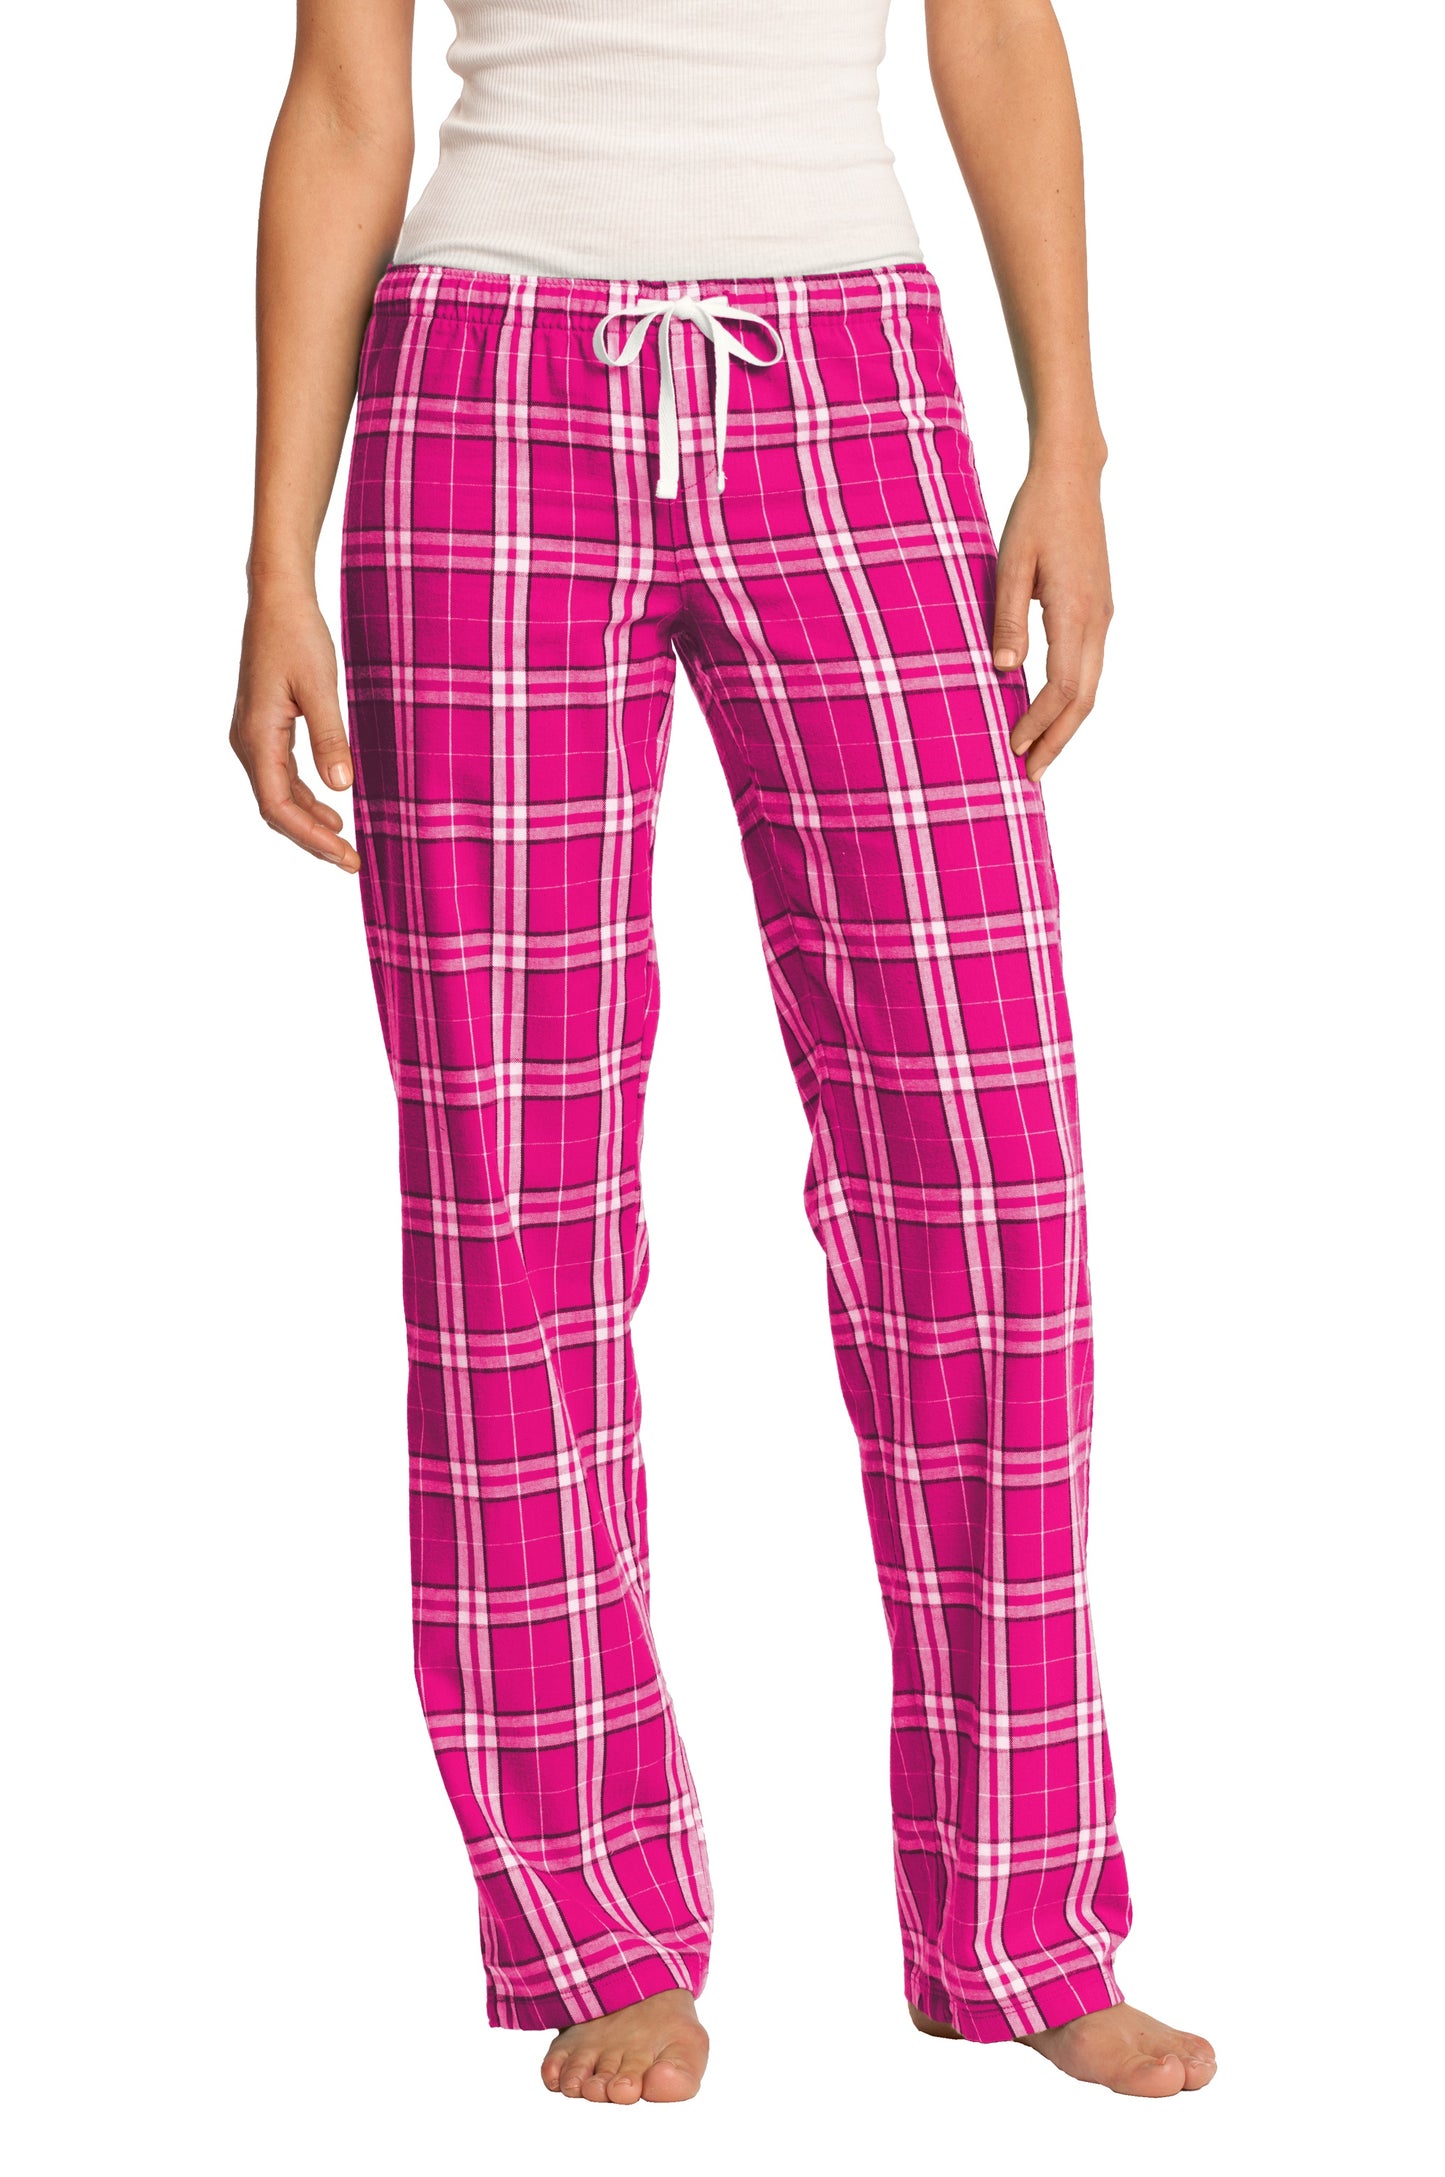 Soft Flannel Plaid Pajama Bottoms